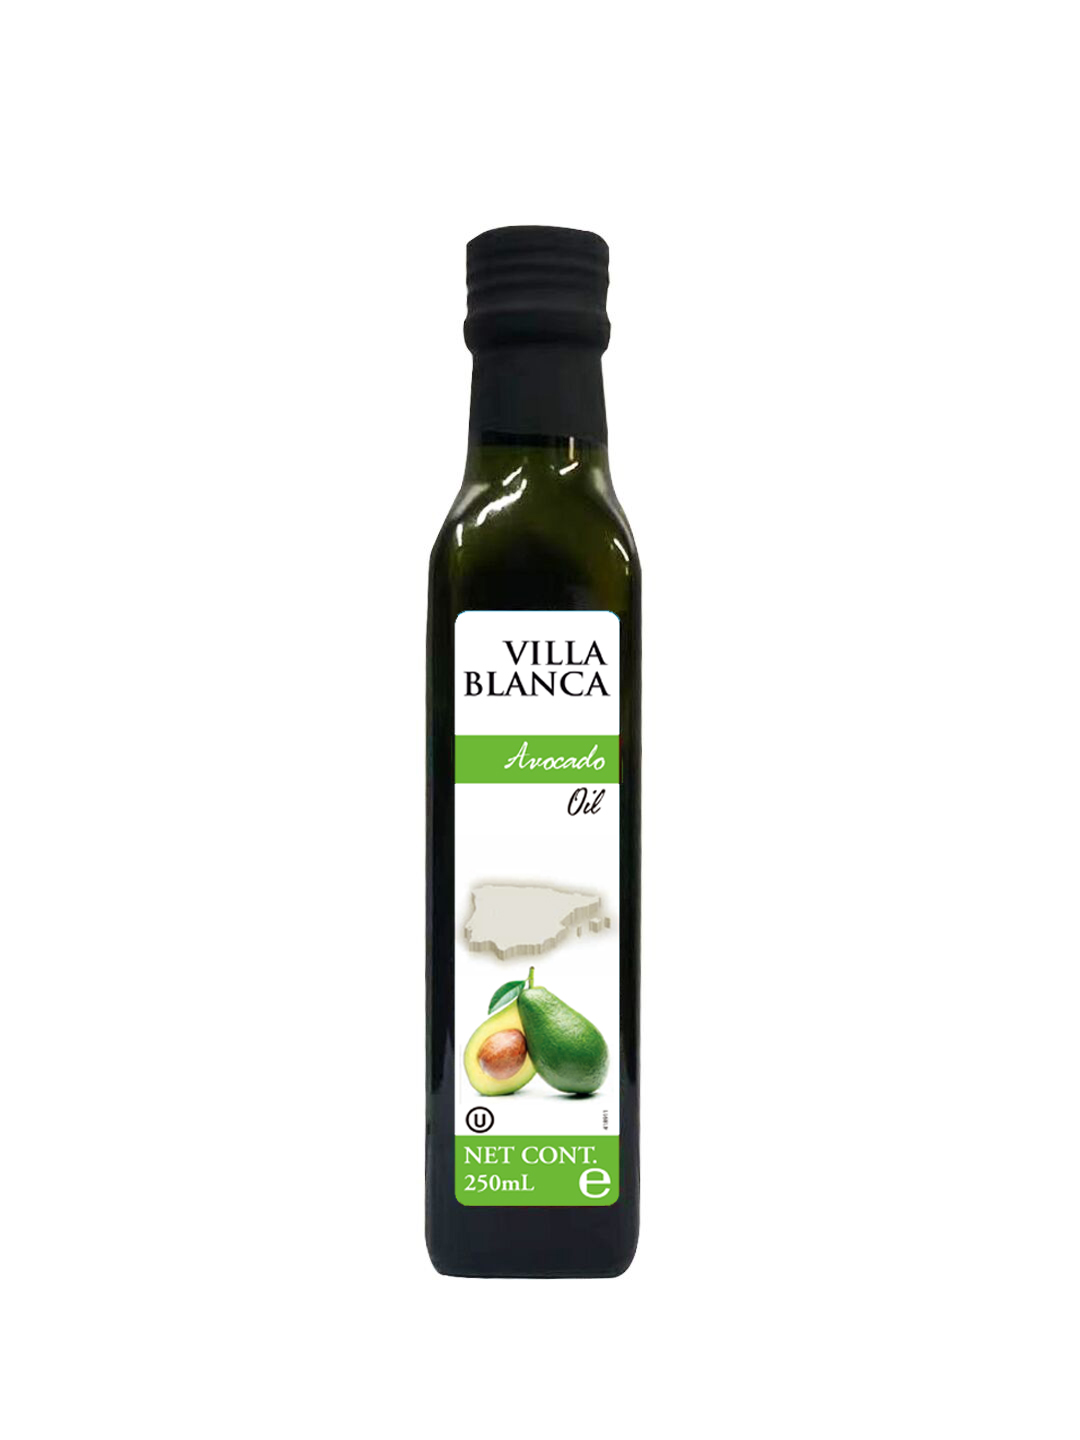 VILLA BLANCA Avocado Oil